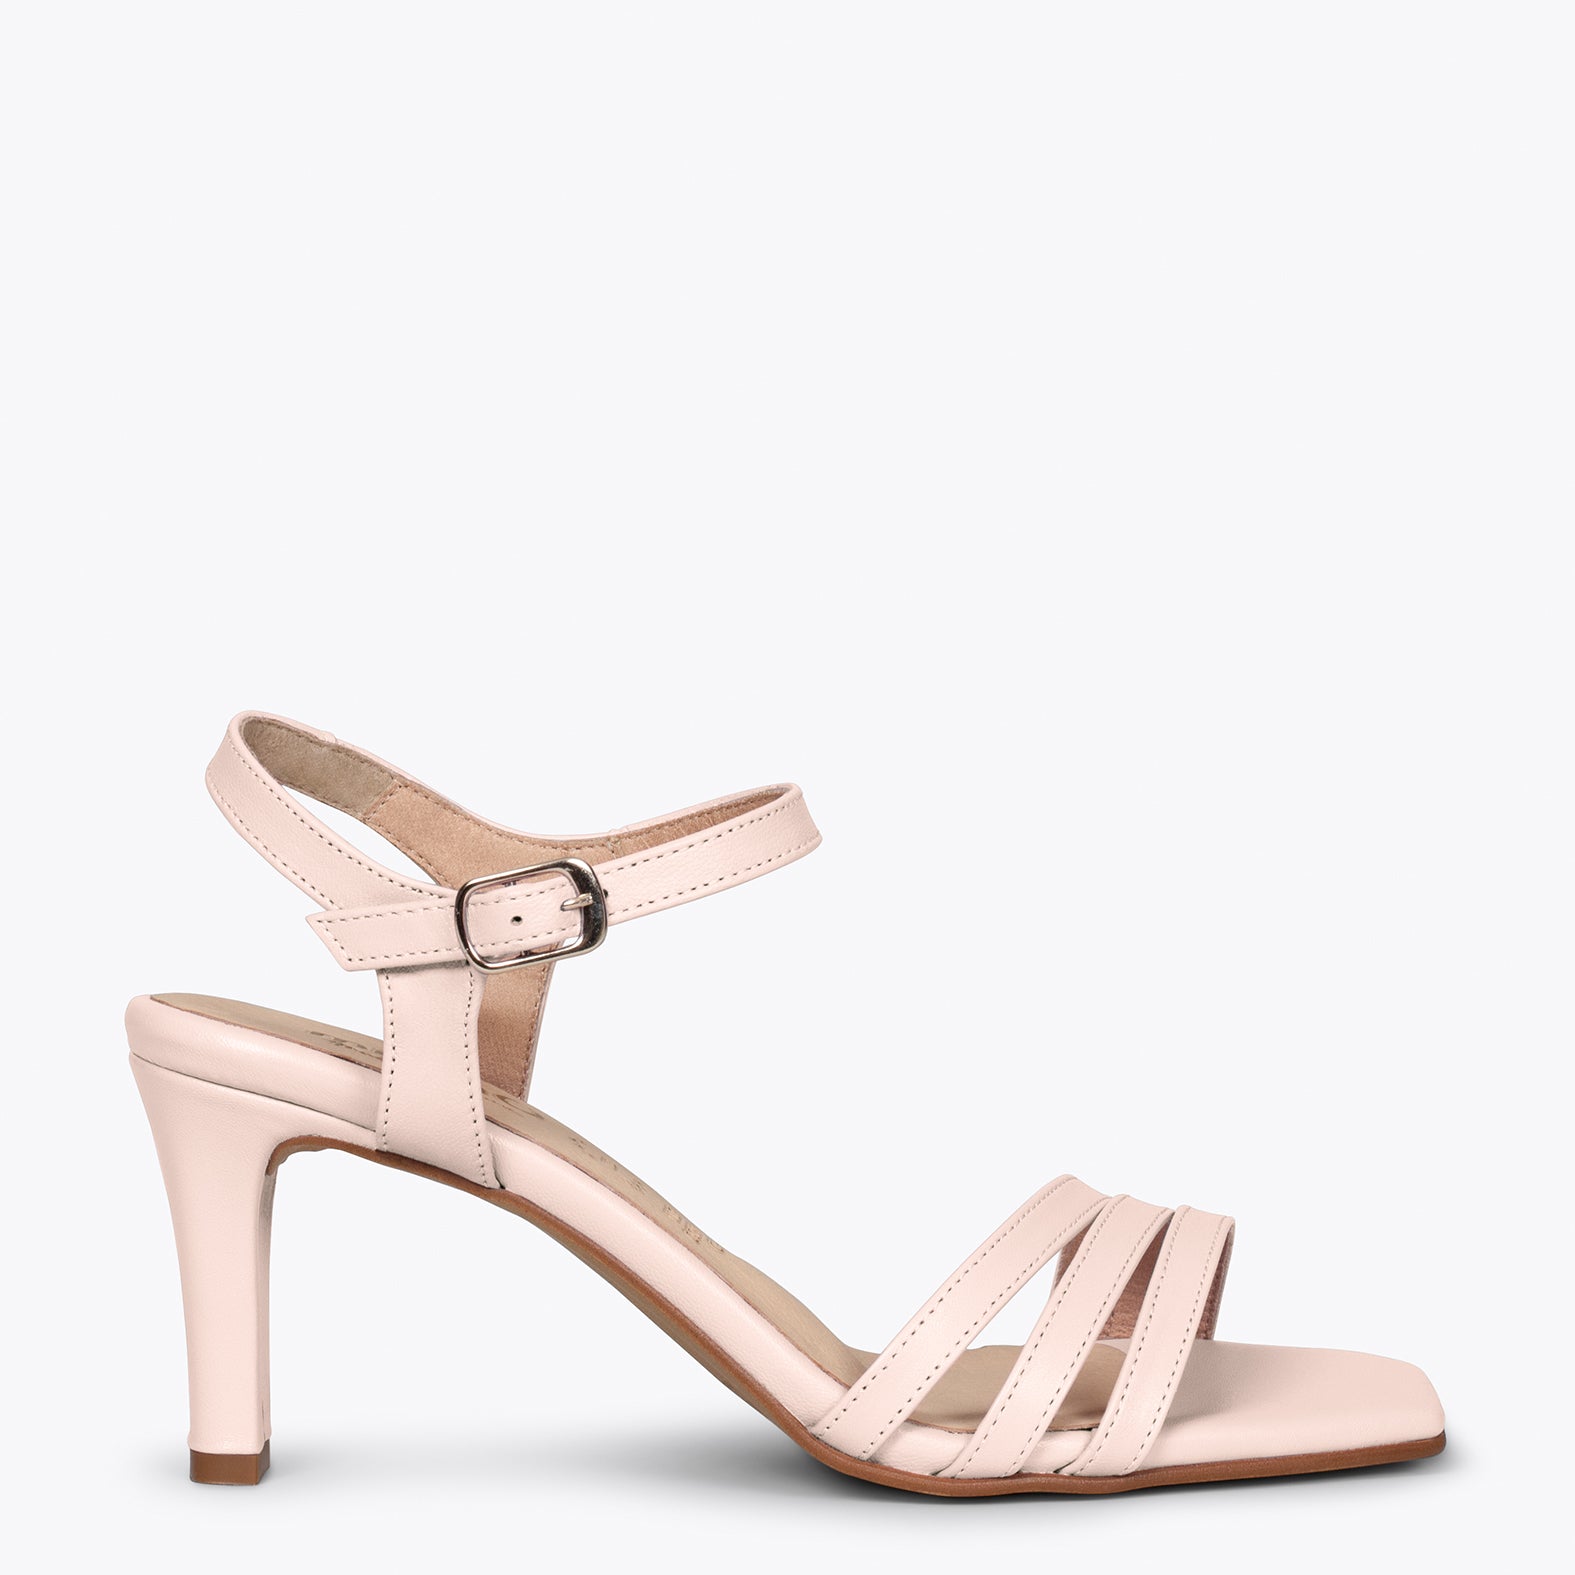 CANNES – NUDE strap high heel sandal